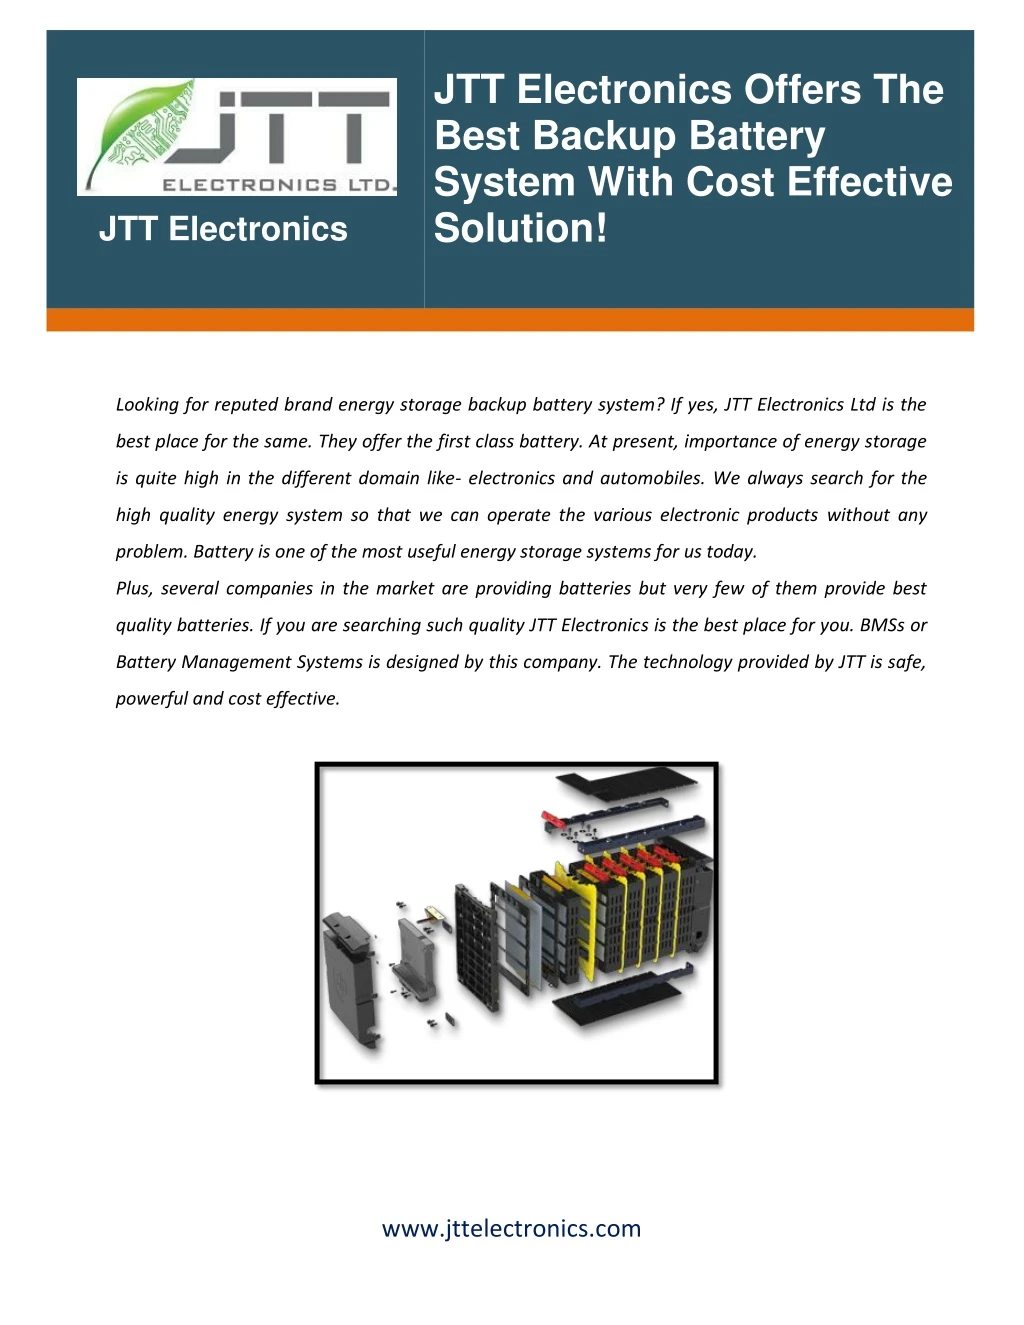 jtt electronics offers the best backup battery